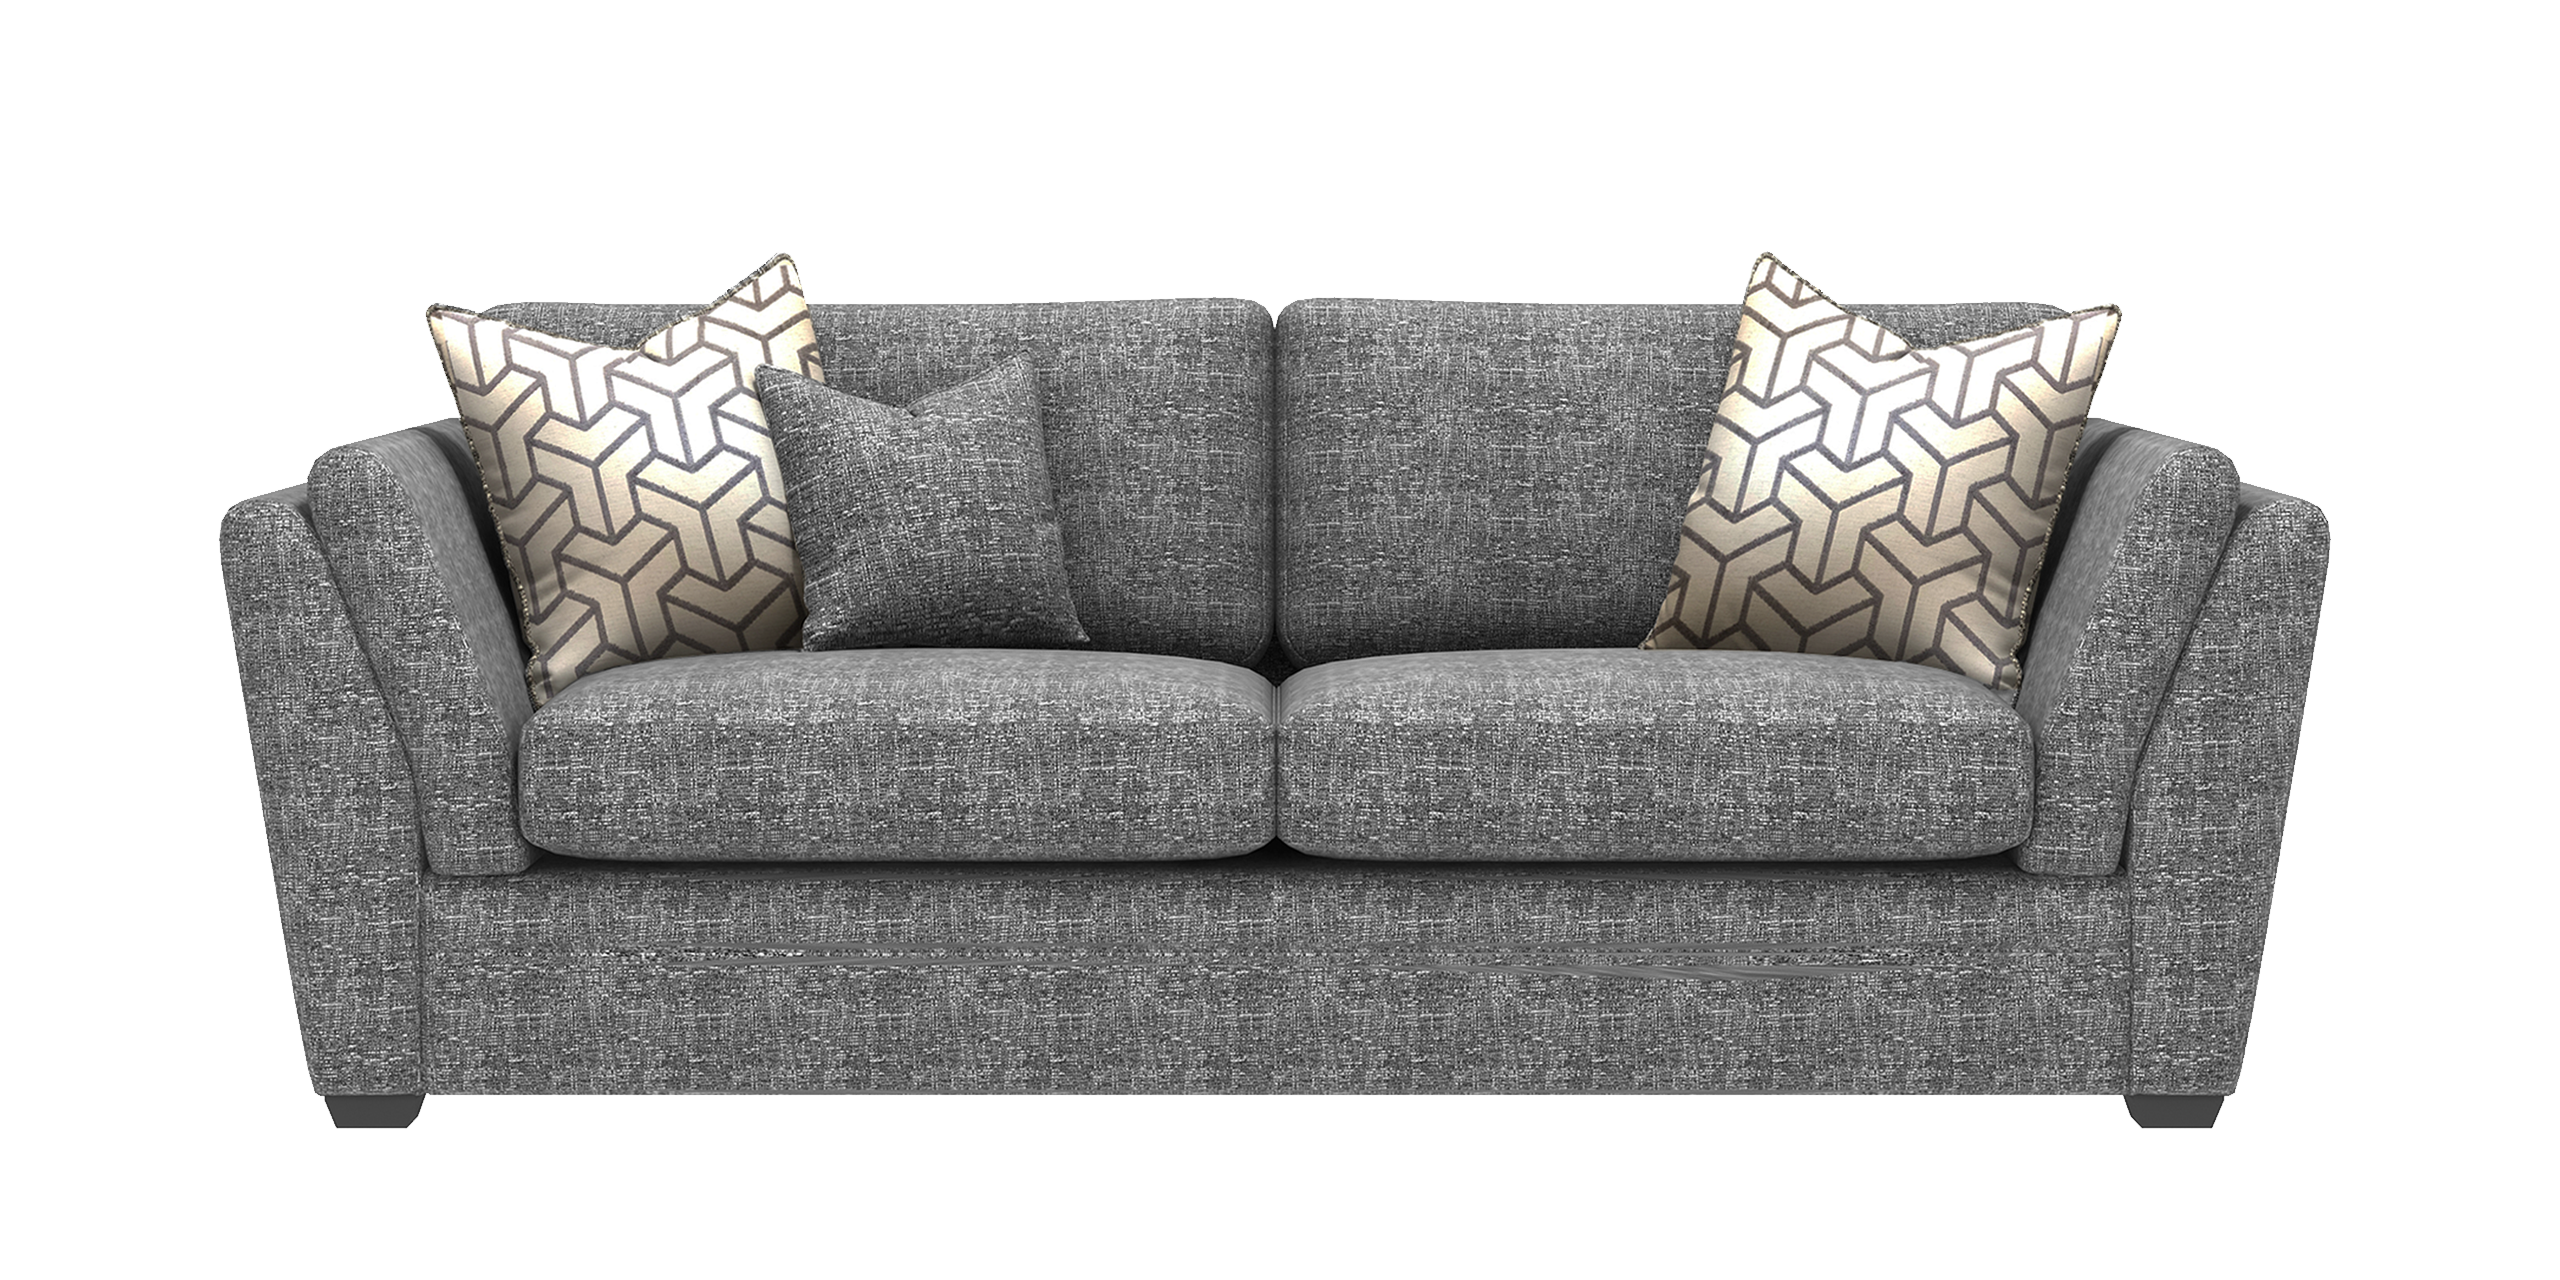 Creed 4 Seater Sofa Workshop